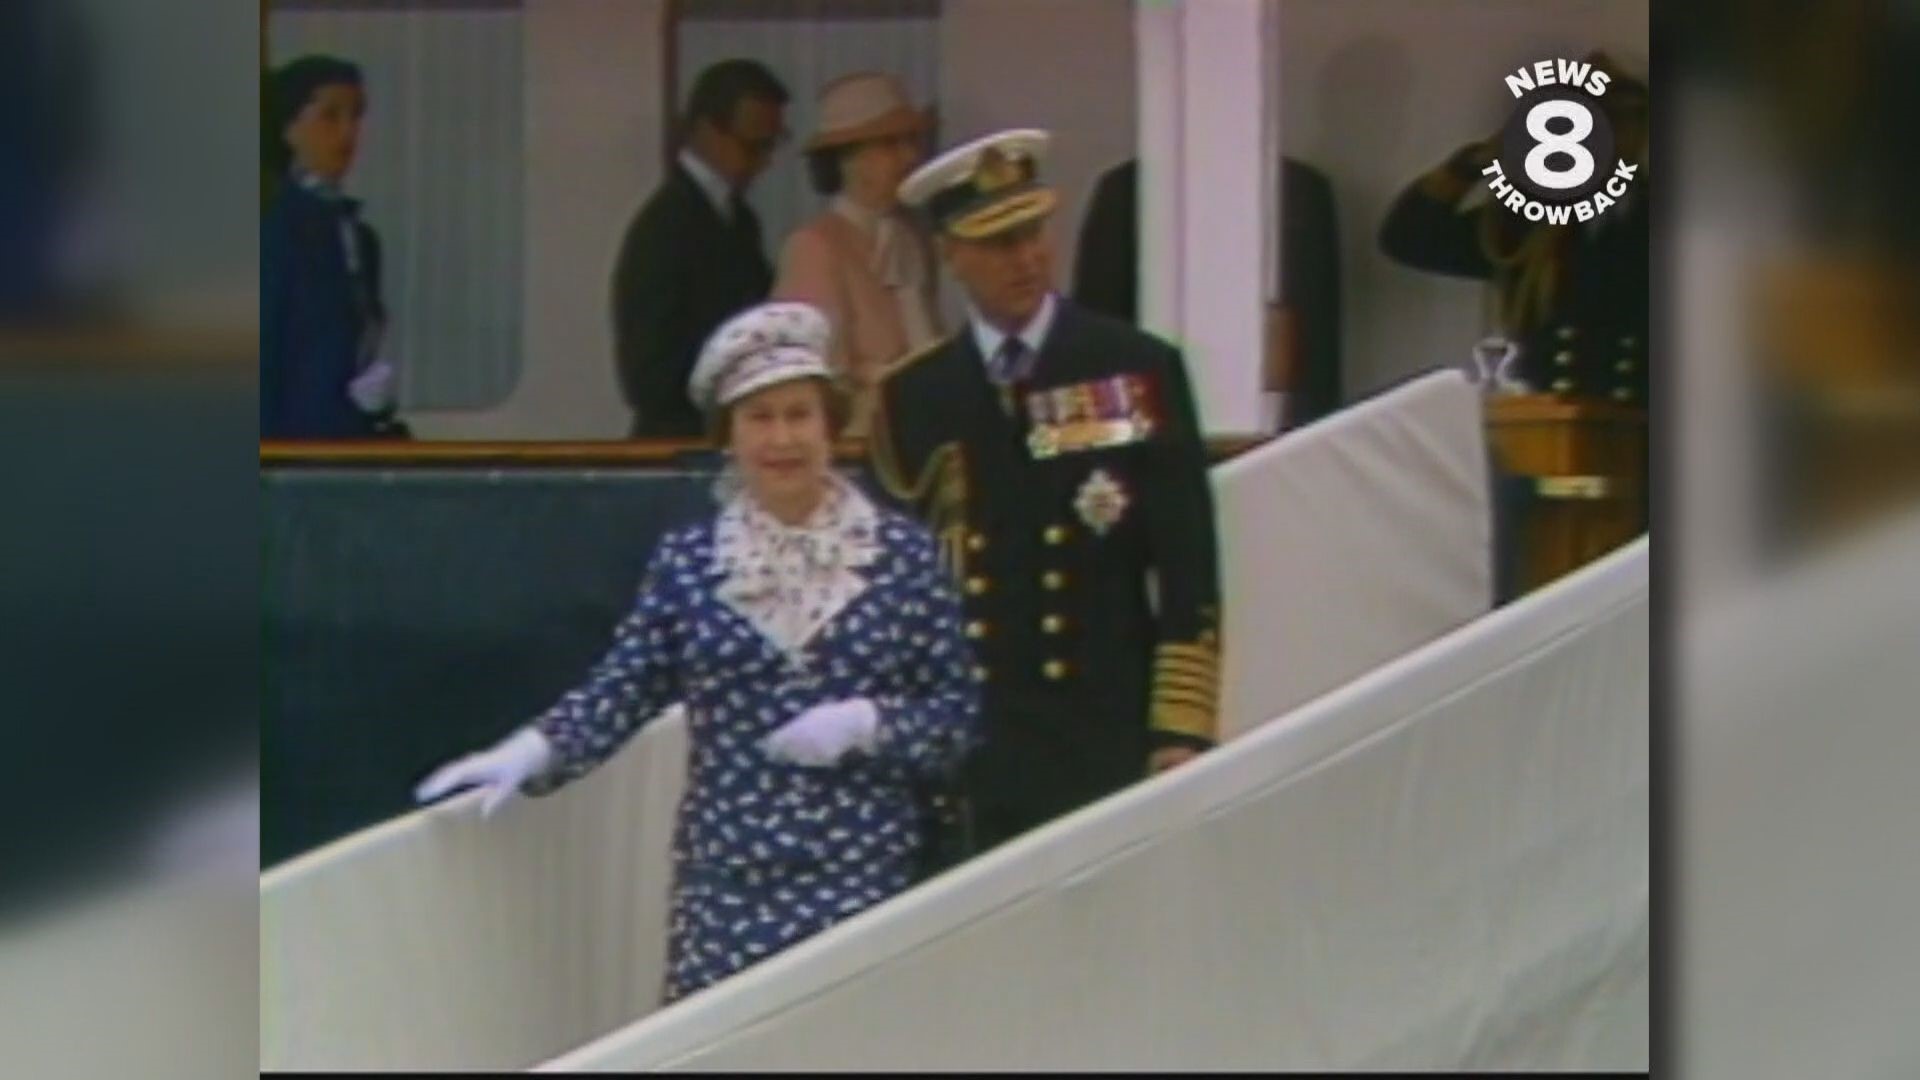 Queen Elizabeth II: Her Majesty the Queen of England visits San Diego in 1983